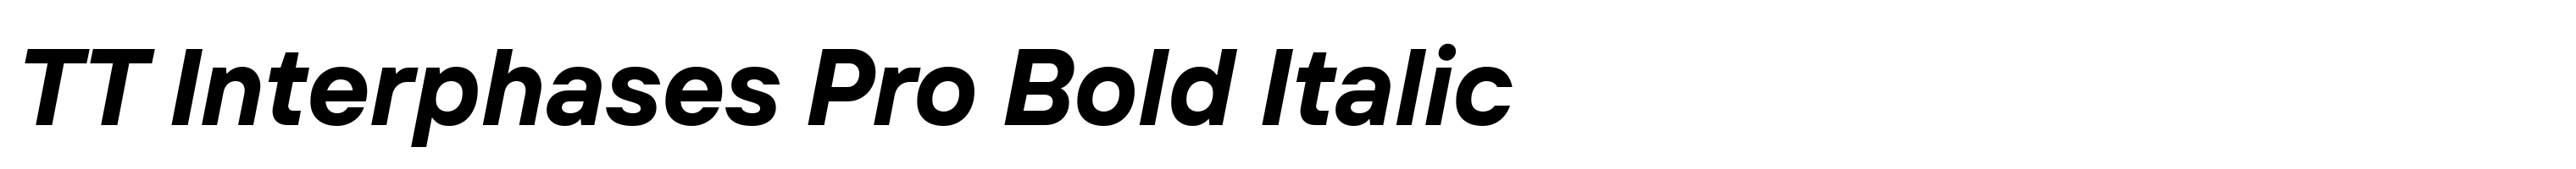 TT Interphases Pro Bold Italic